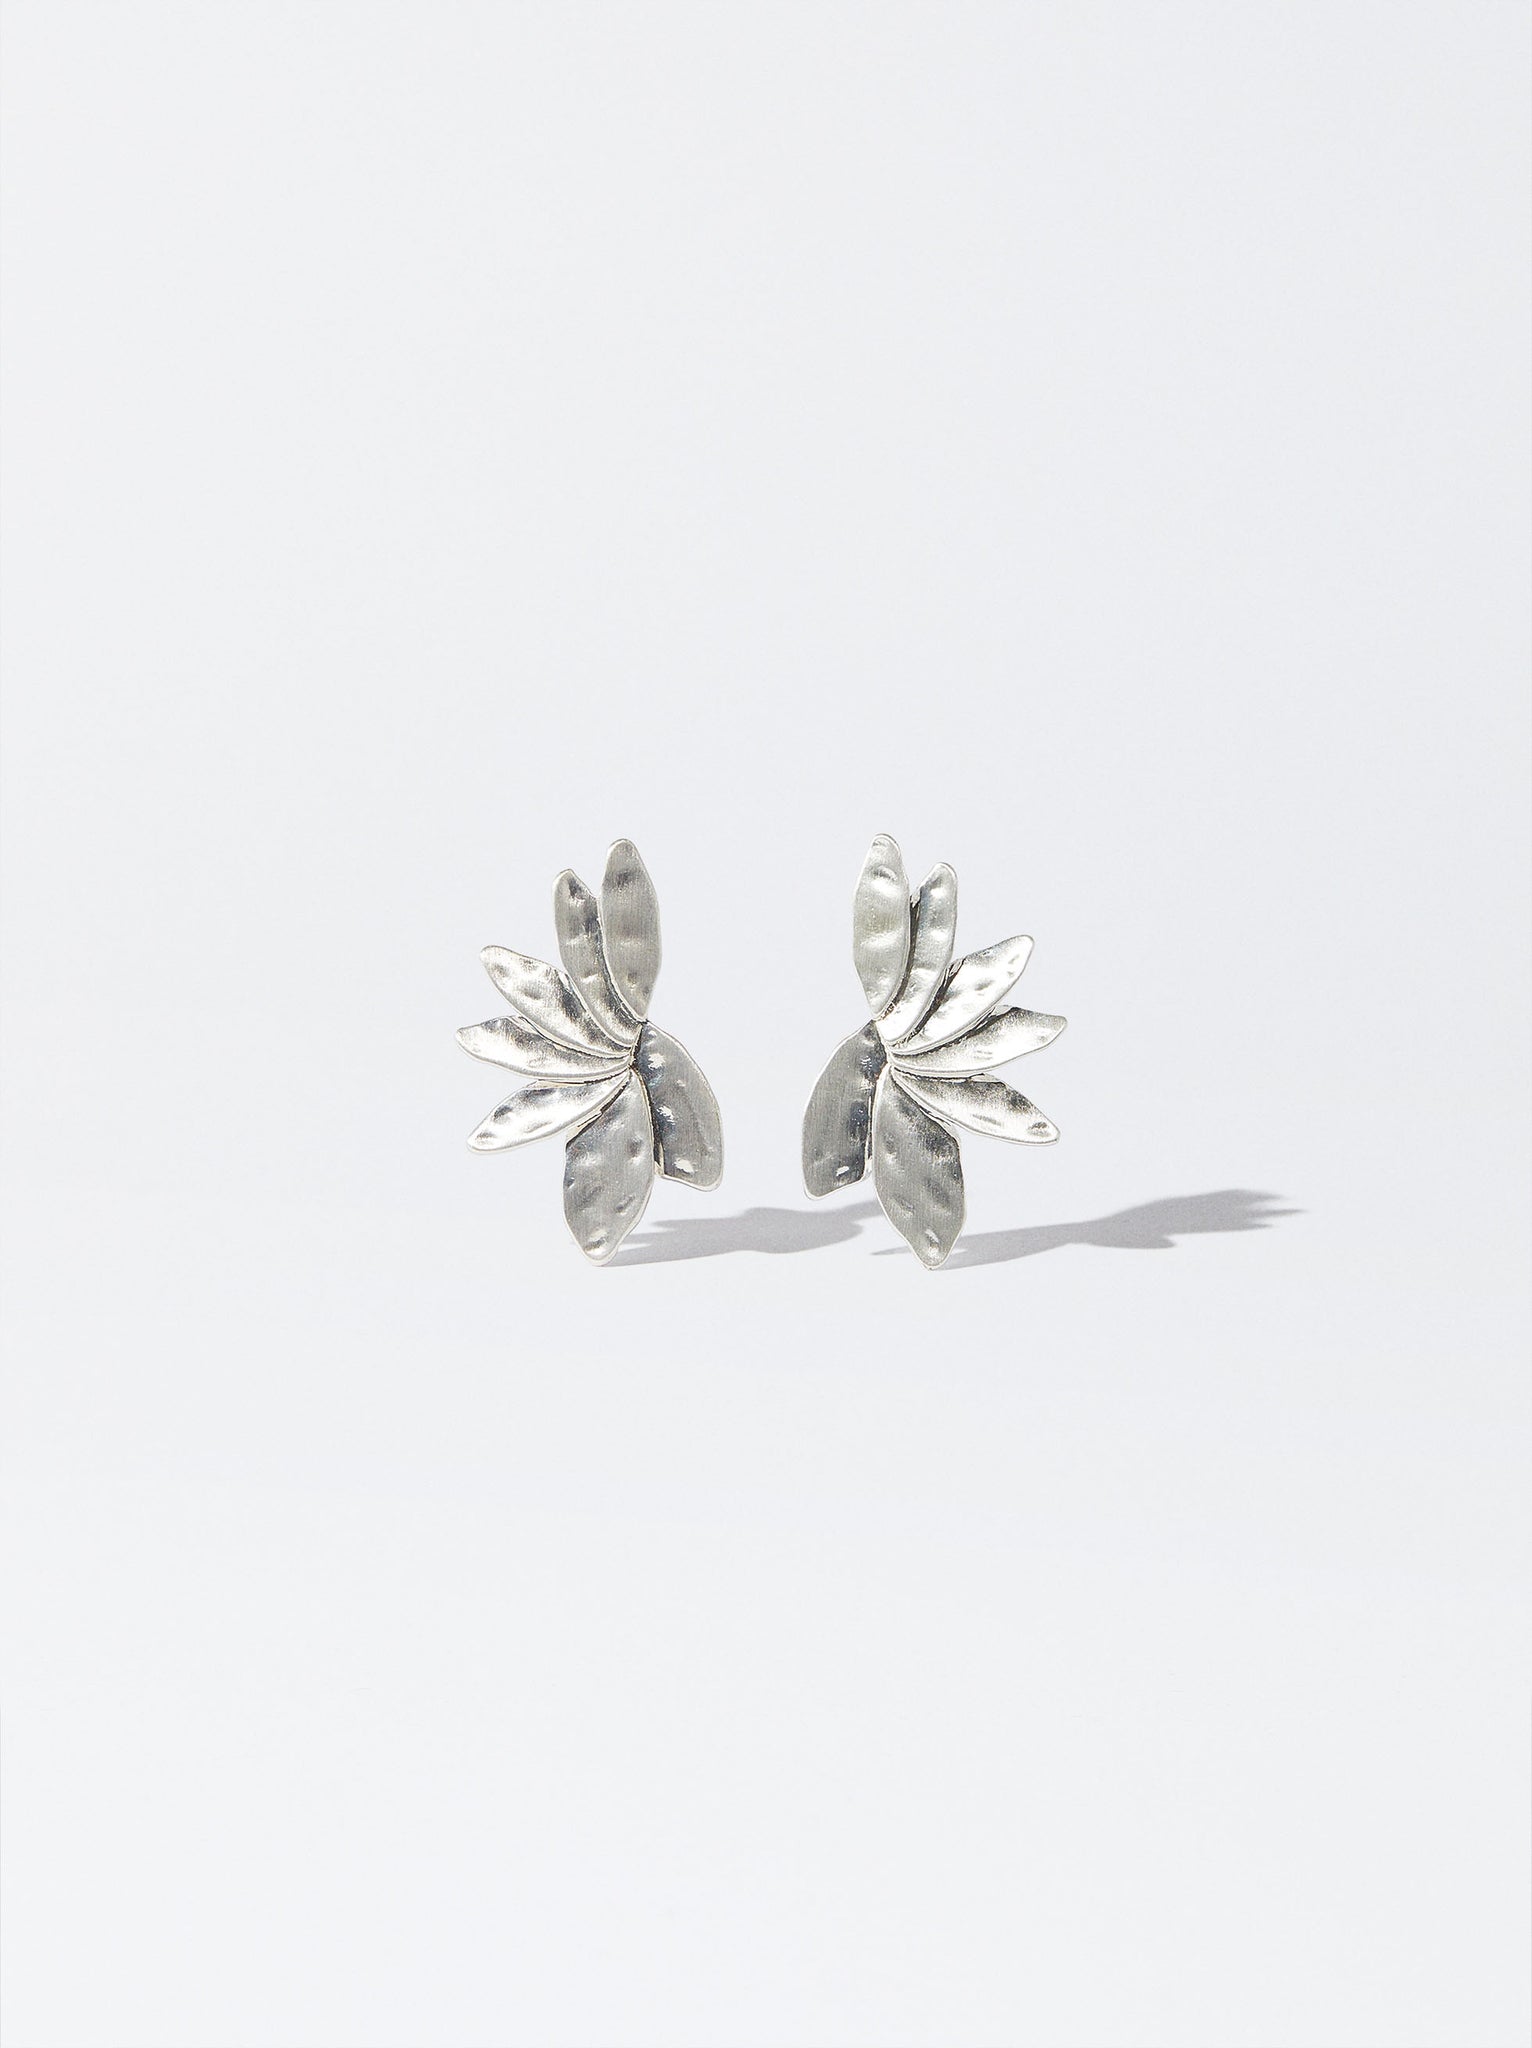 Silver Earrings With Flower